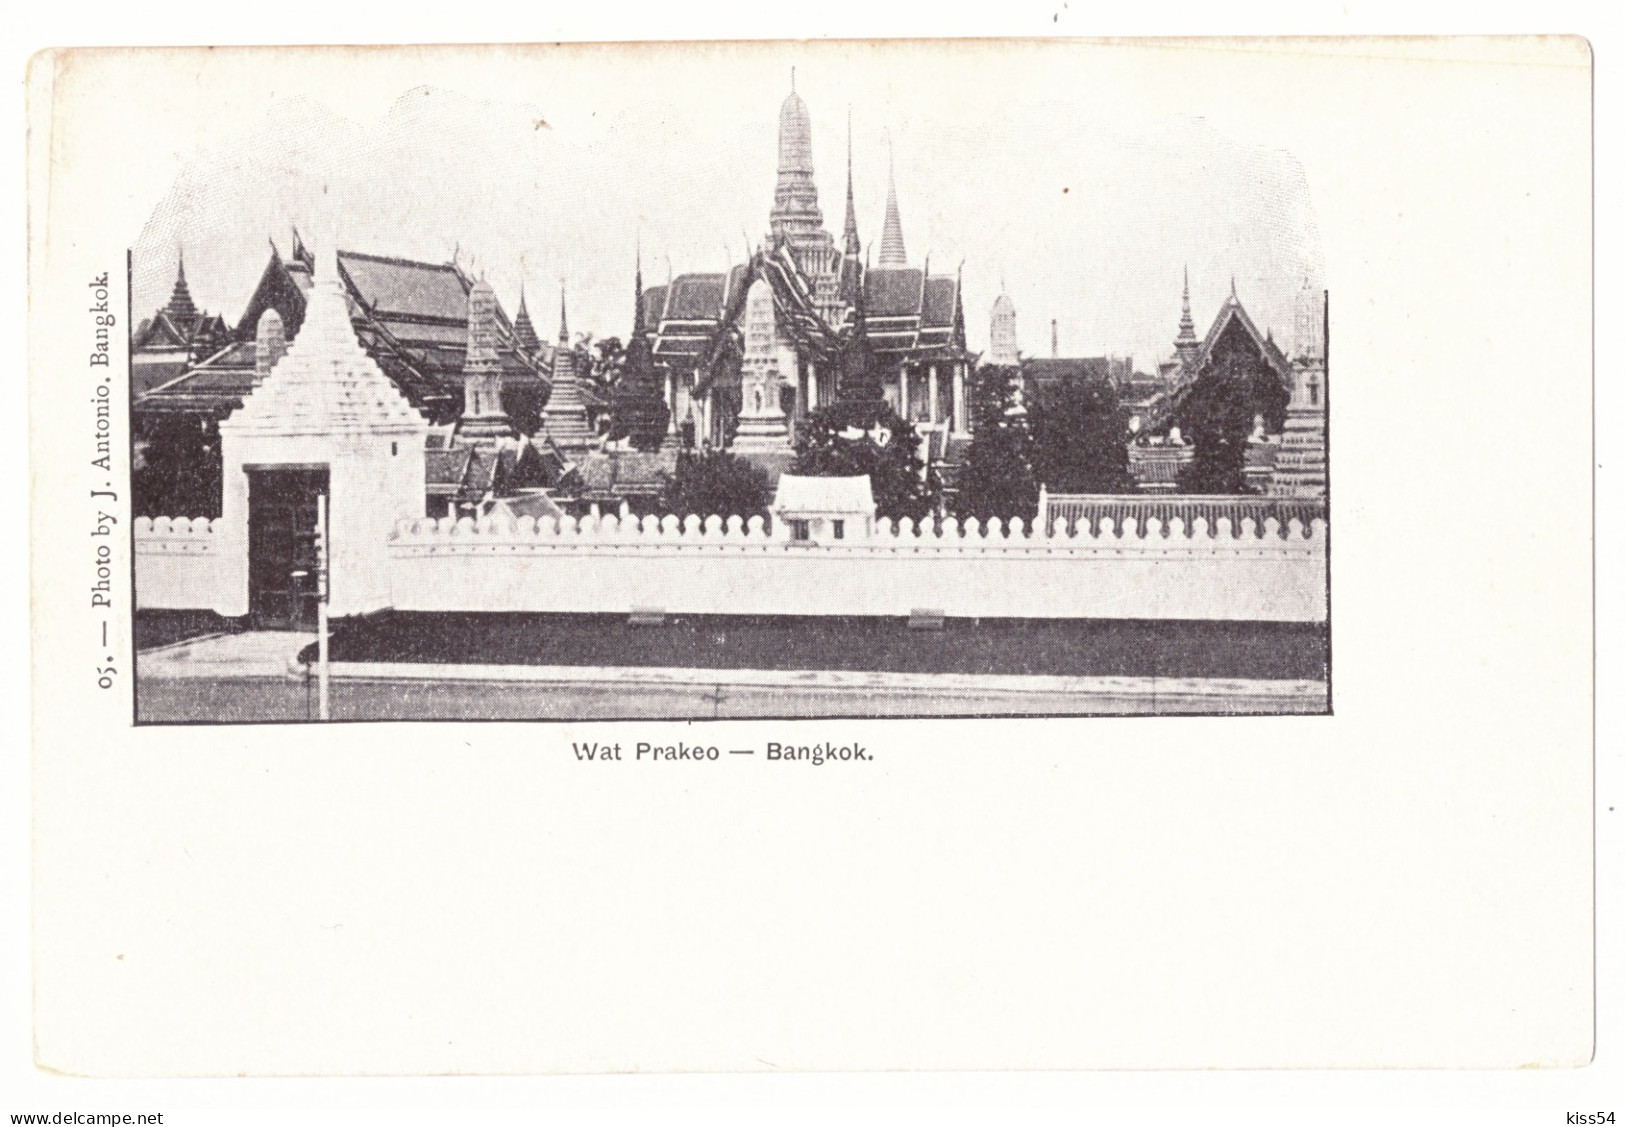 TH 60 - 20619 BANGKOK, Thailand - Old Postcard - Unused - Thailand